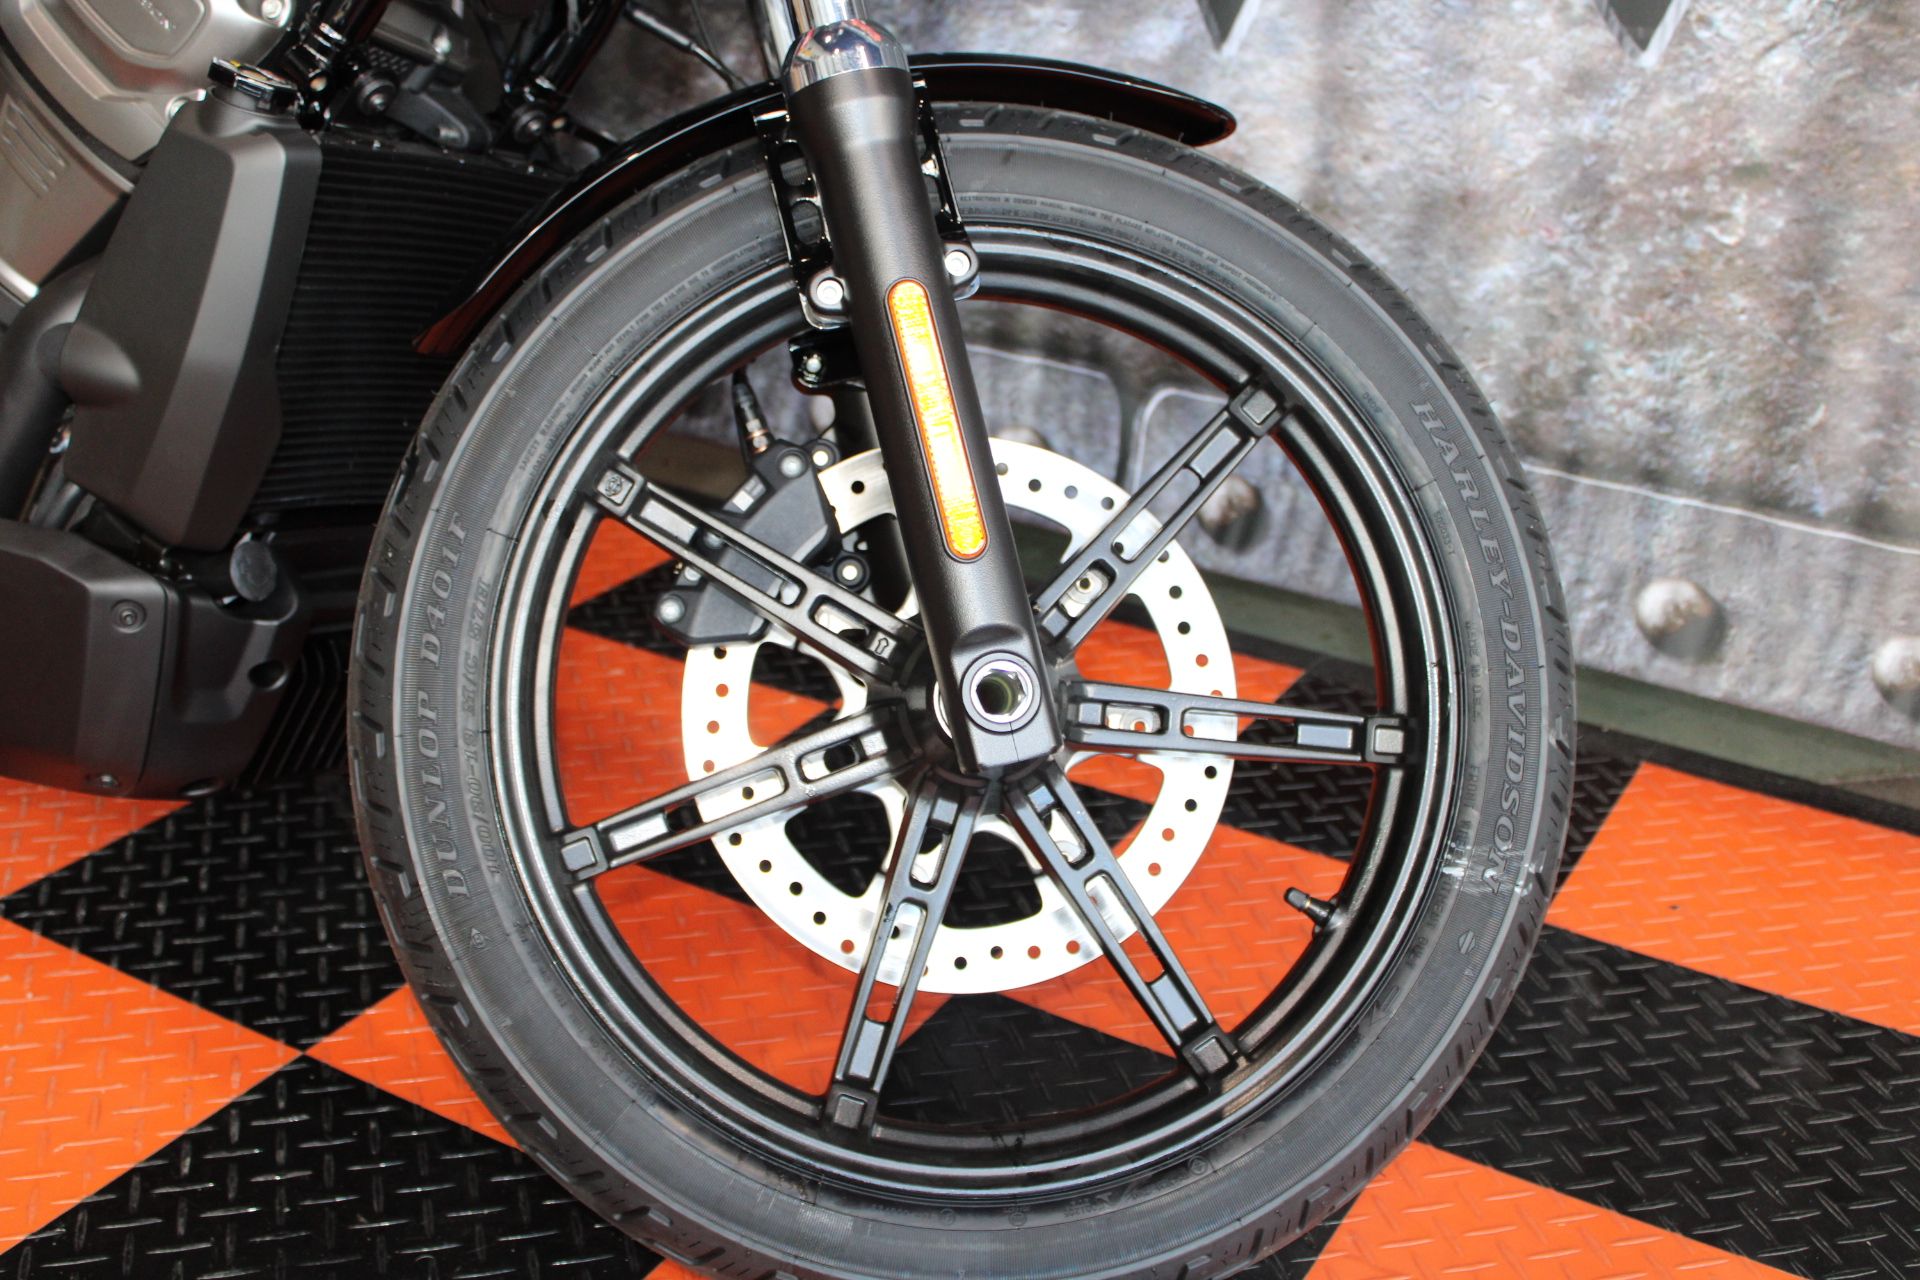 2023 Harley-Davidson Nightster® in Shorewood, Illinois - Photo 4